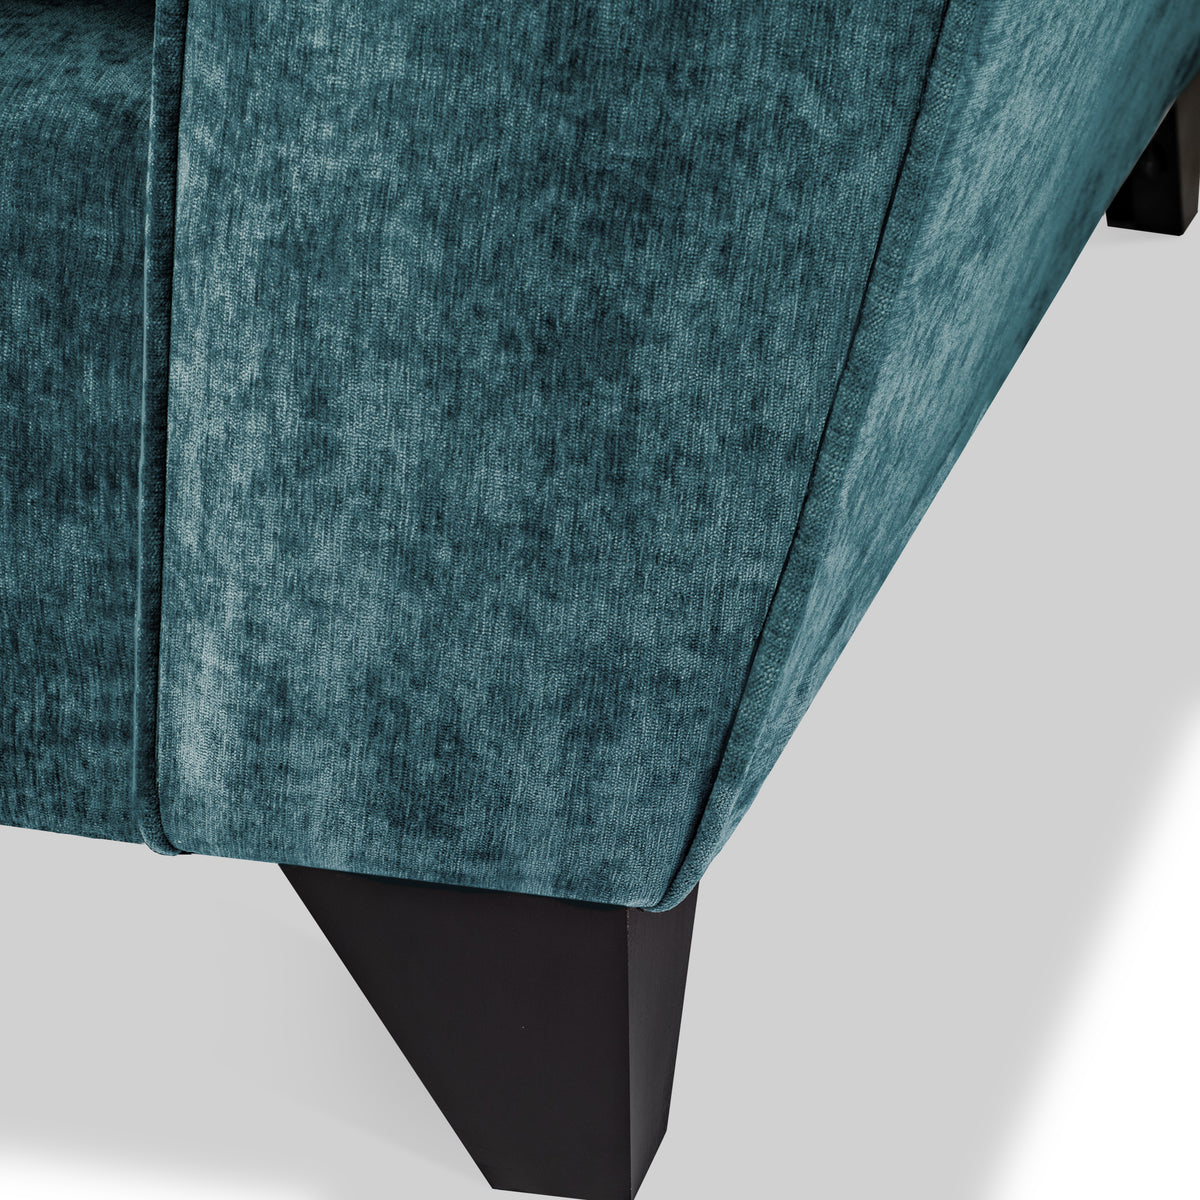 Harris 3 Seater Sofa in Emerald by Roseland Furniture